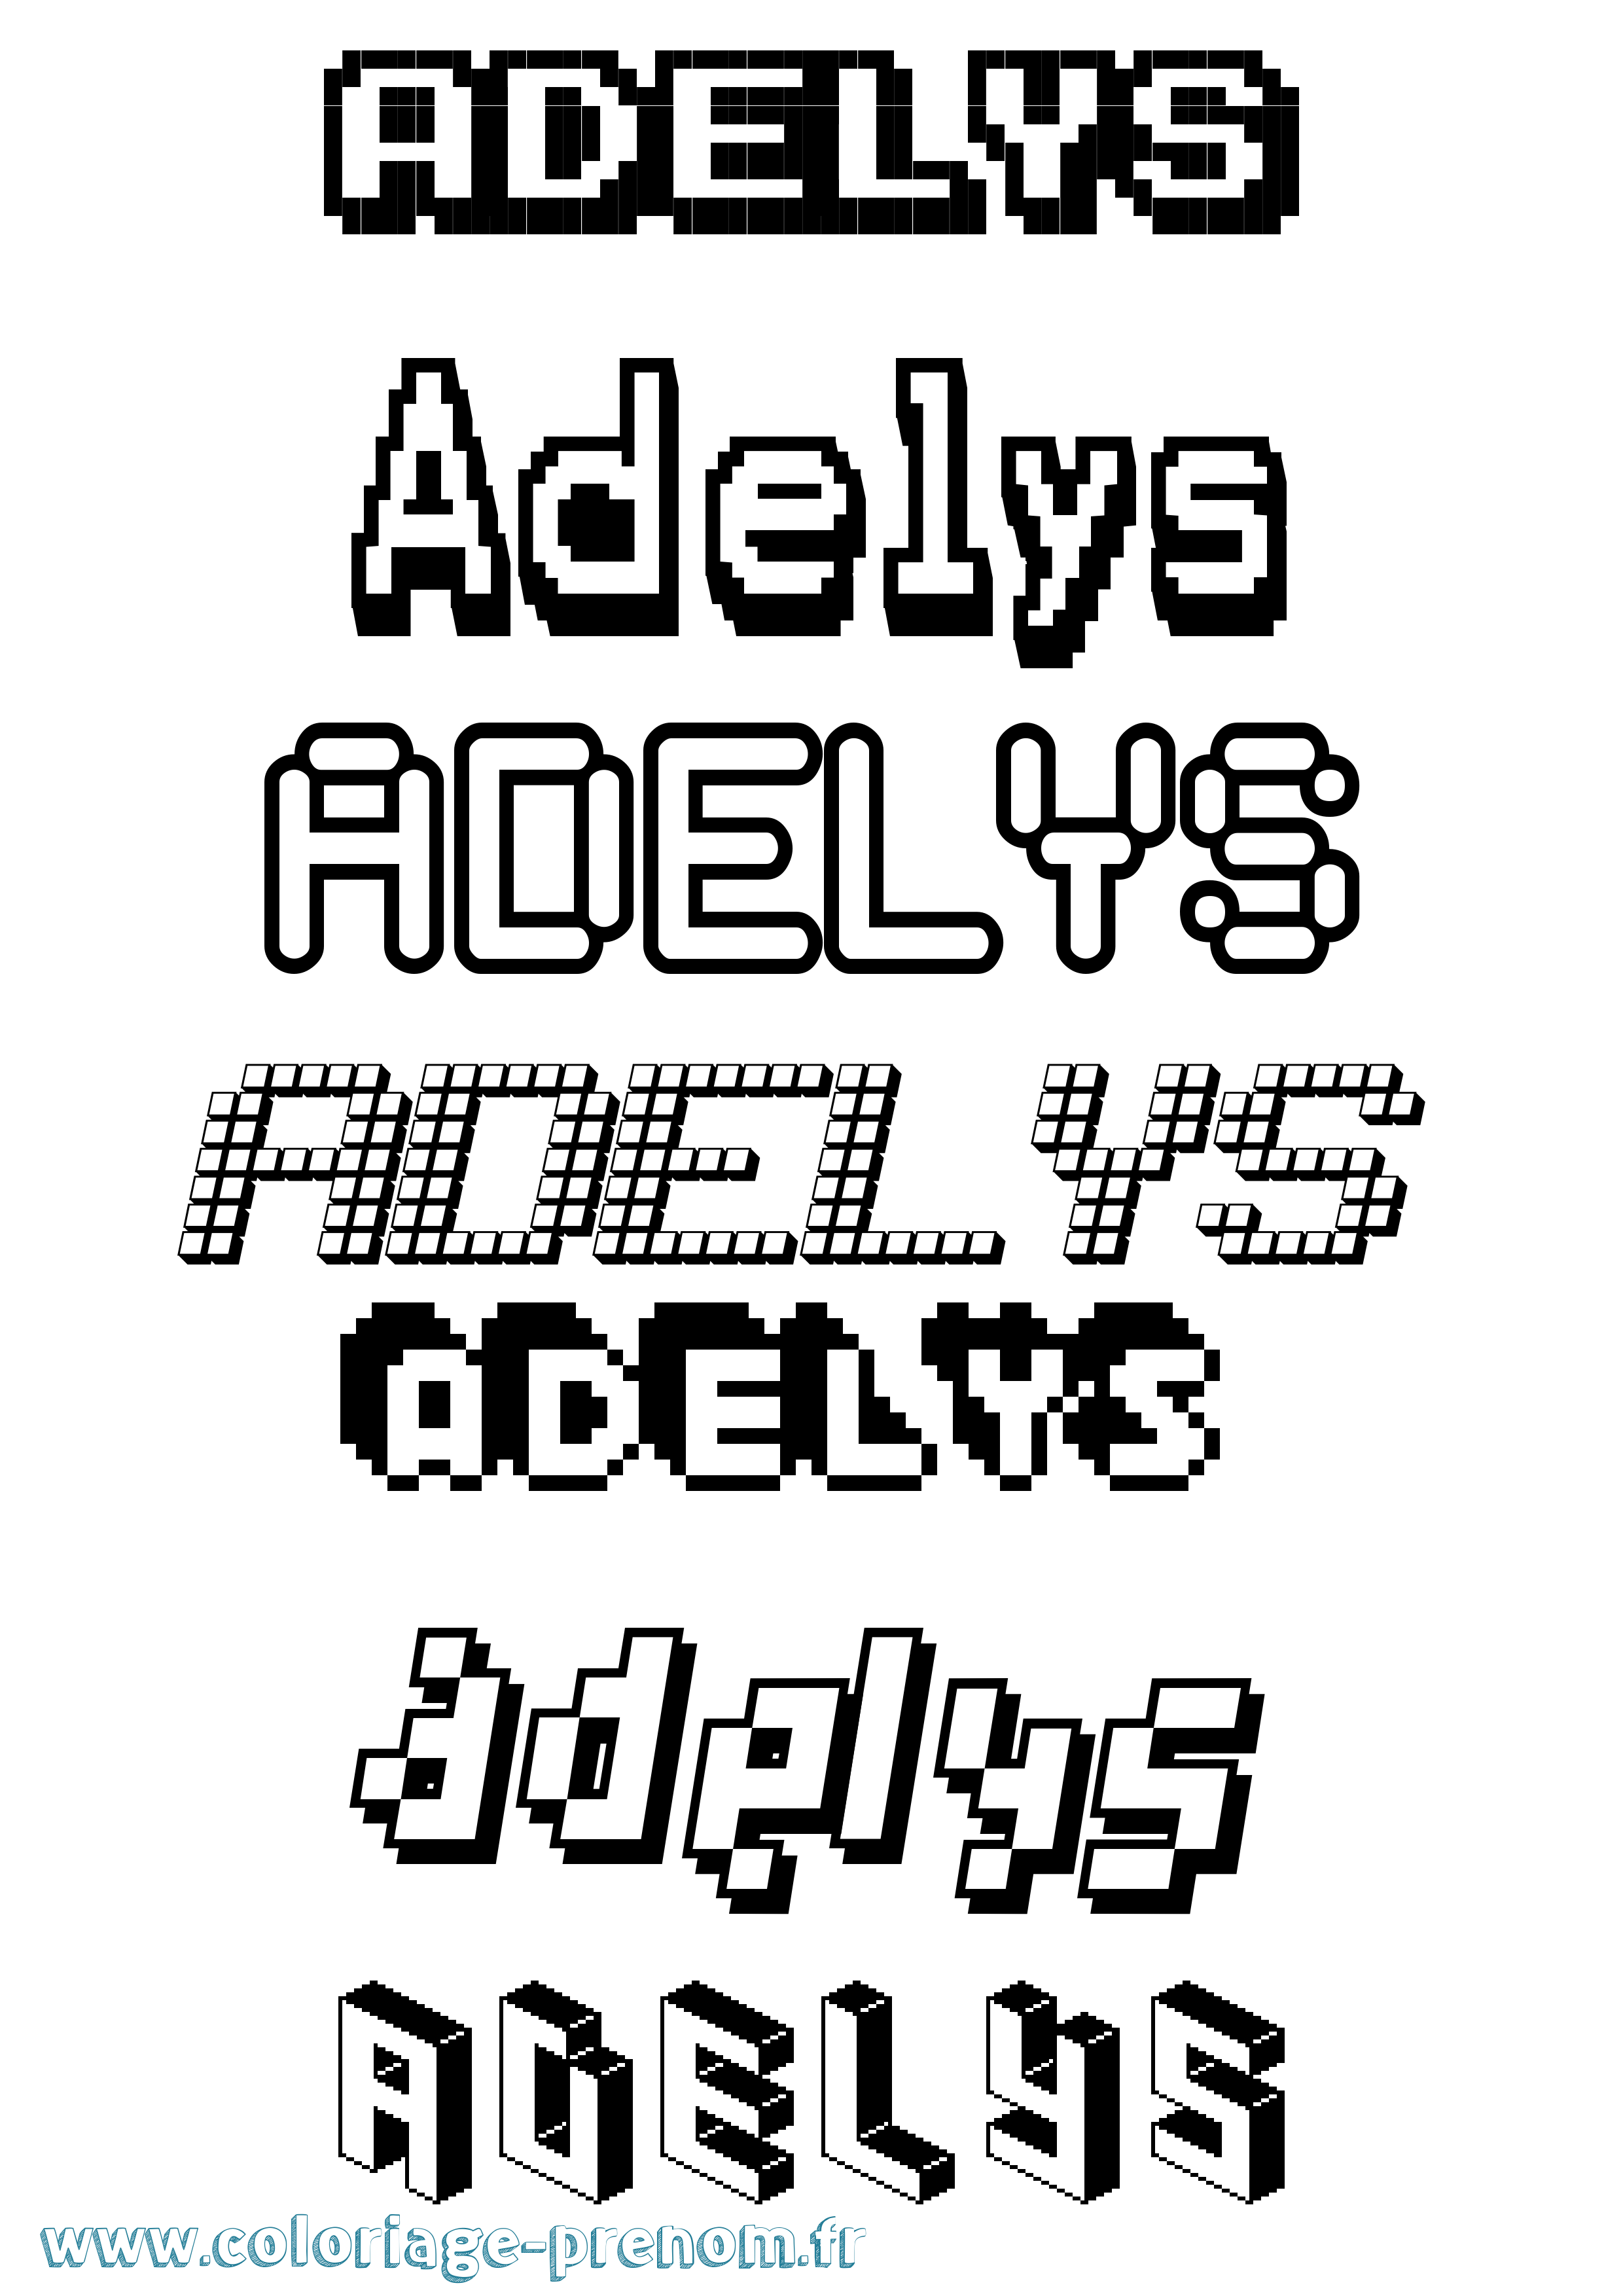 Coloriage prénom Adelys Pixel